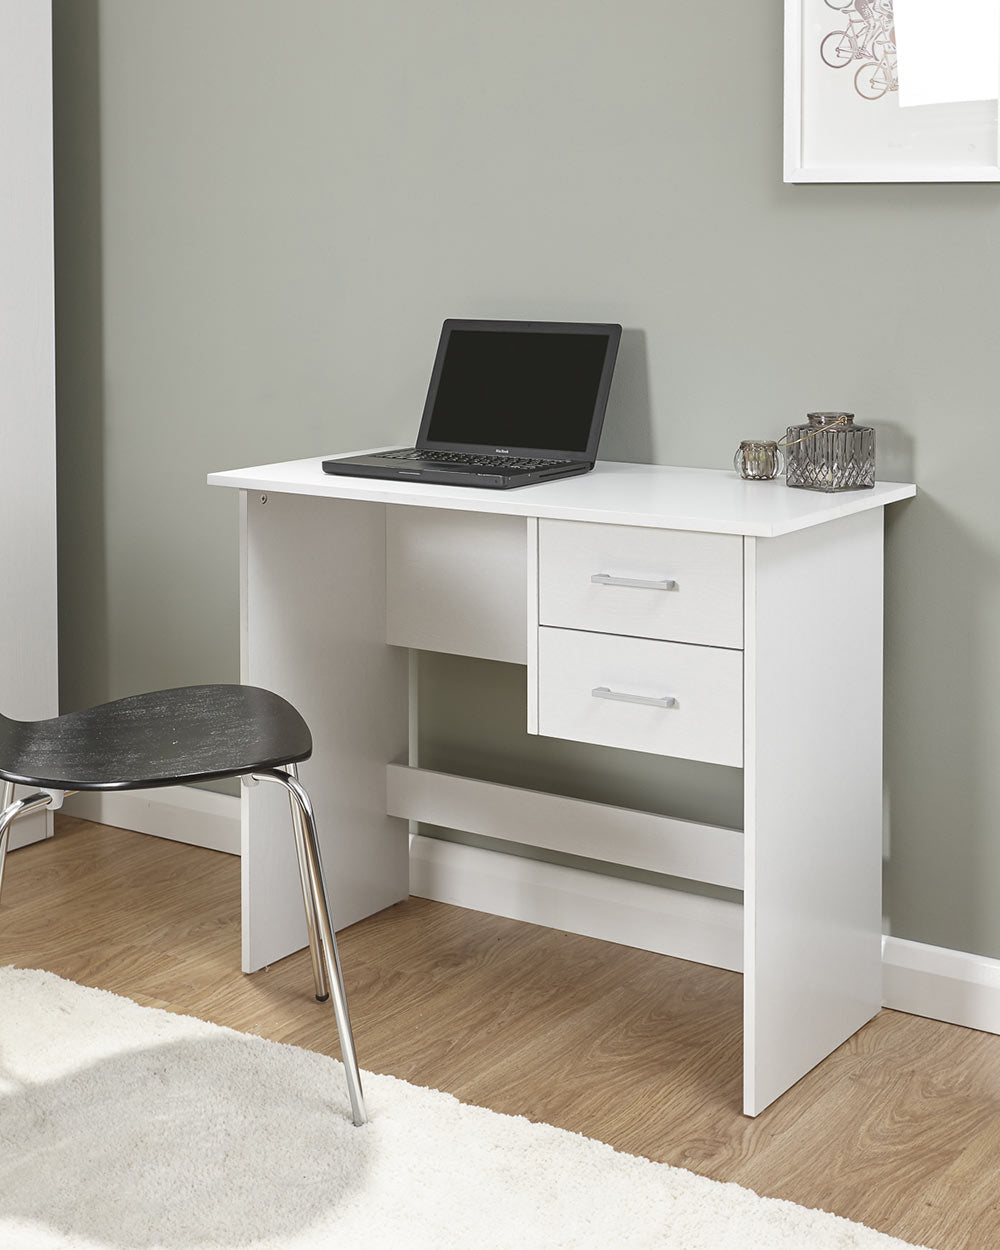 panama 2 drawer desk home office lifestyle photo